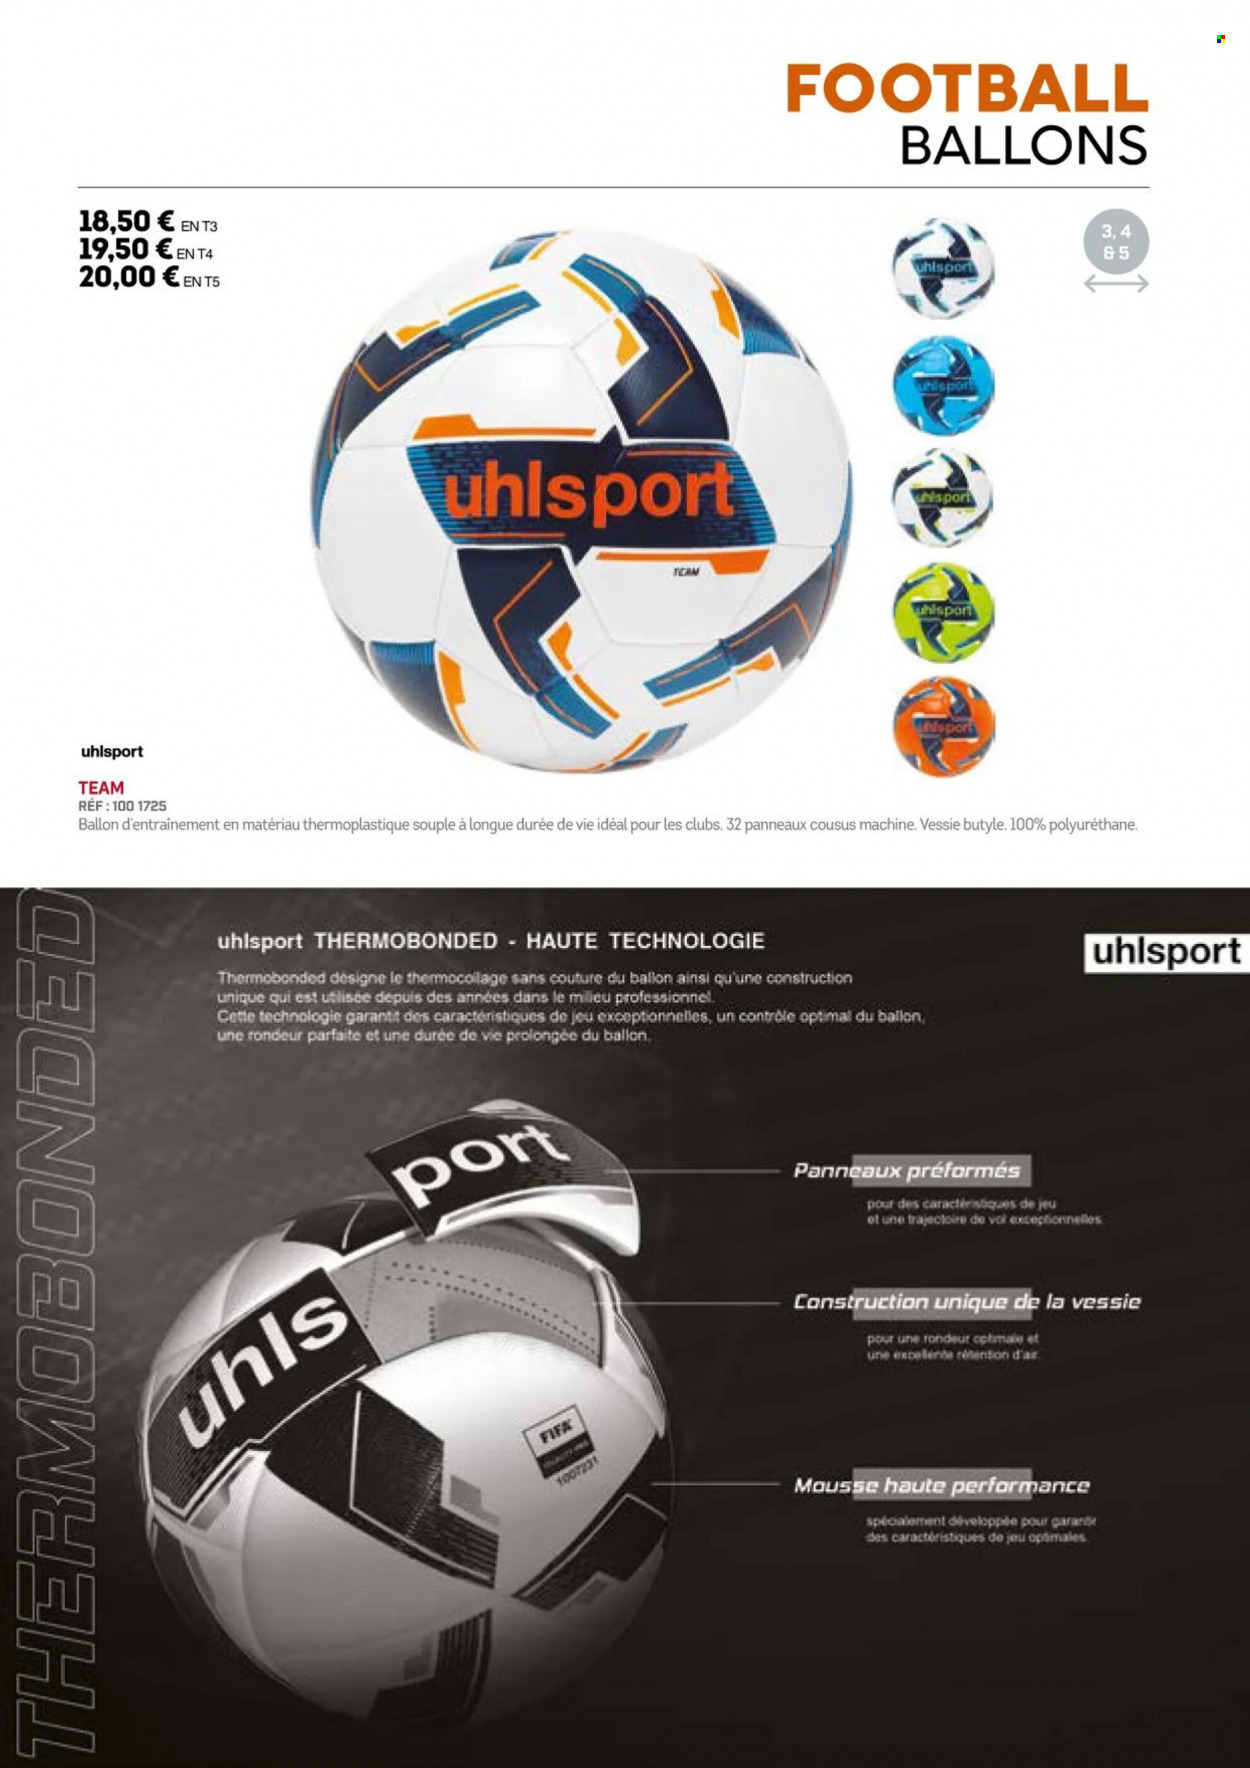 thumbnail - Catalogue Sport 2000.